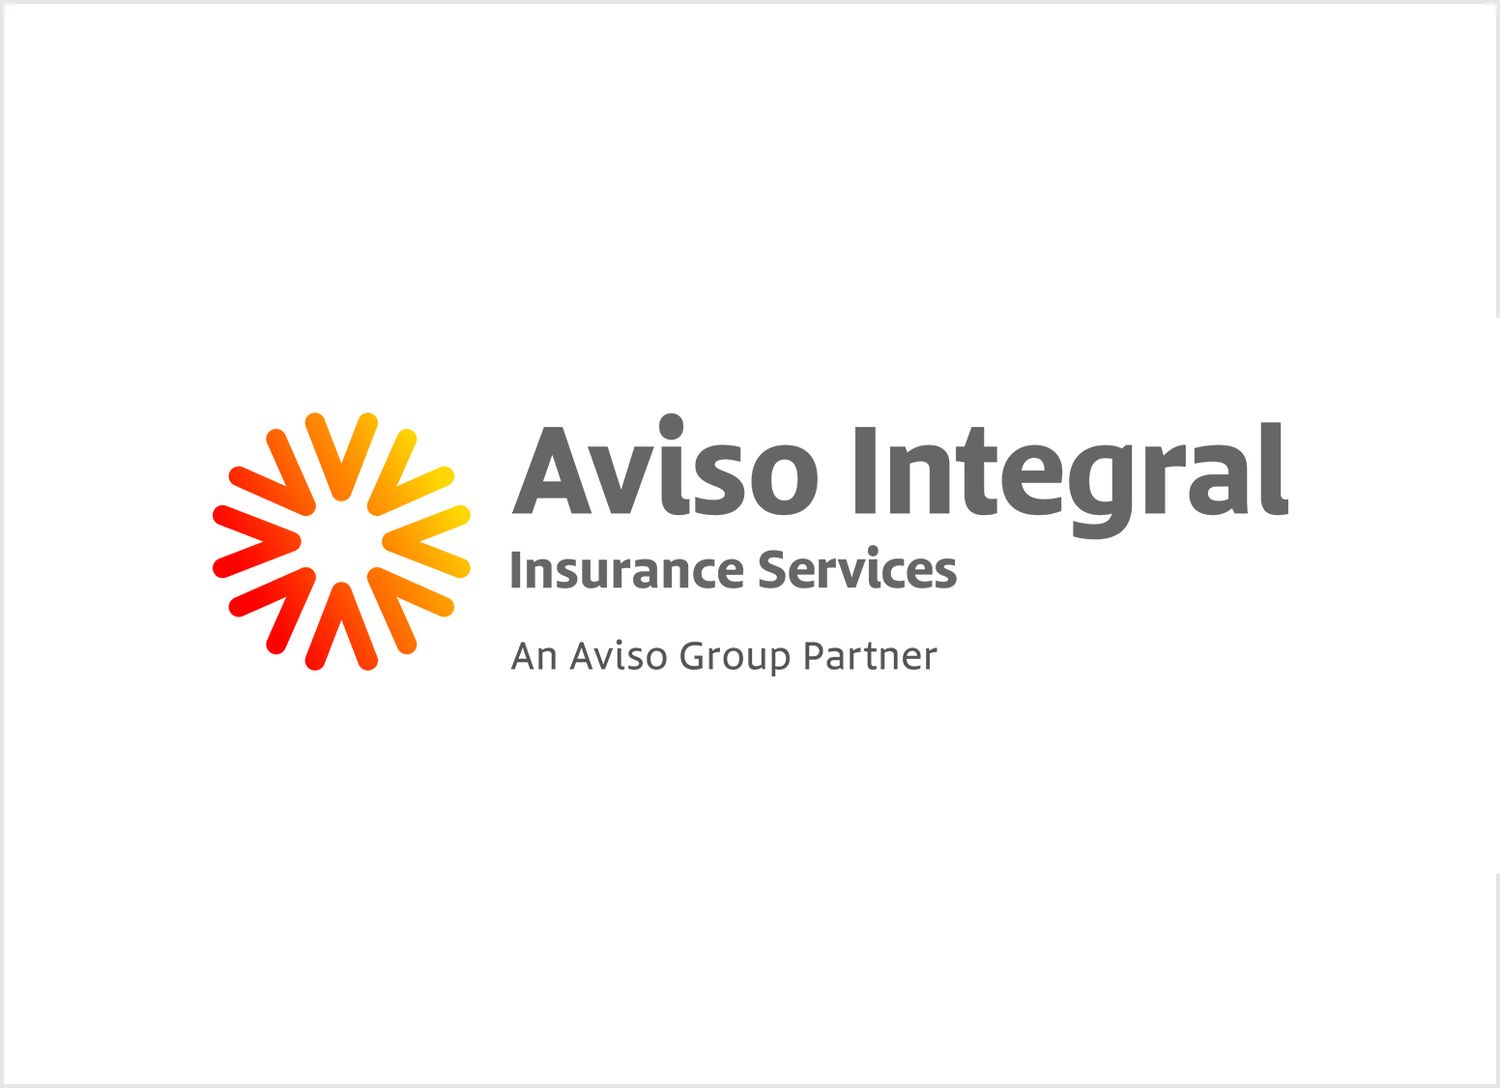 Aviso Integral Insurance Services